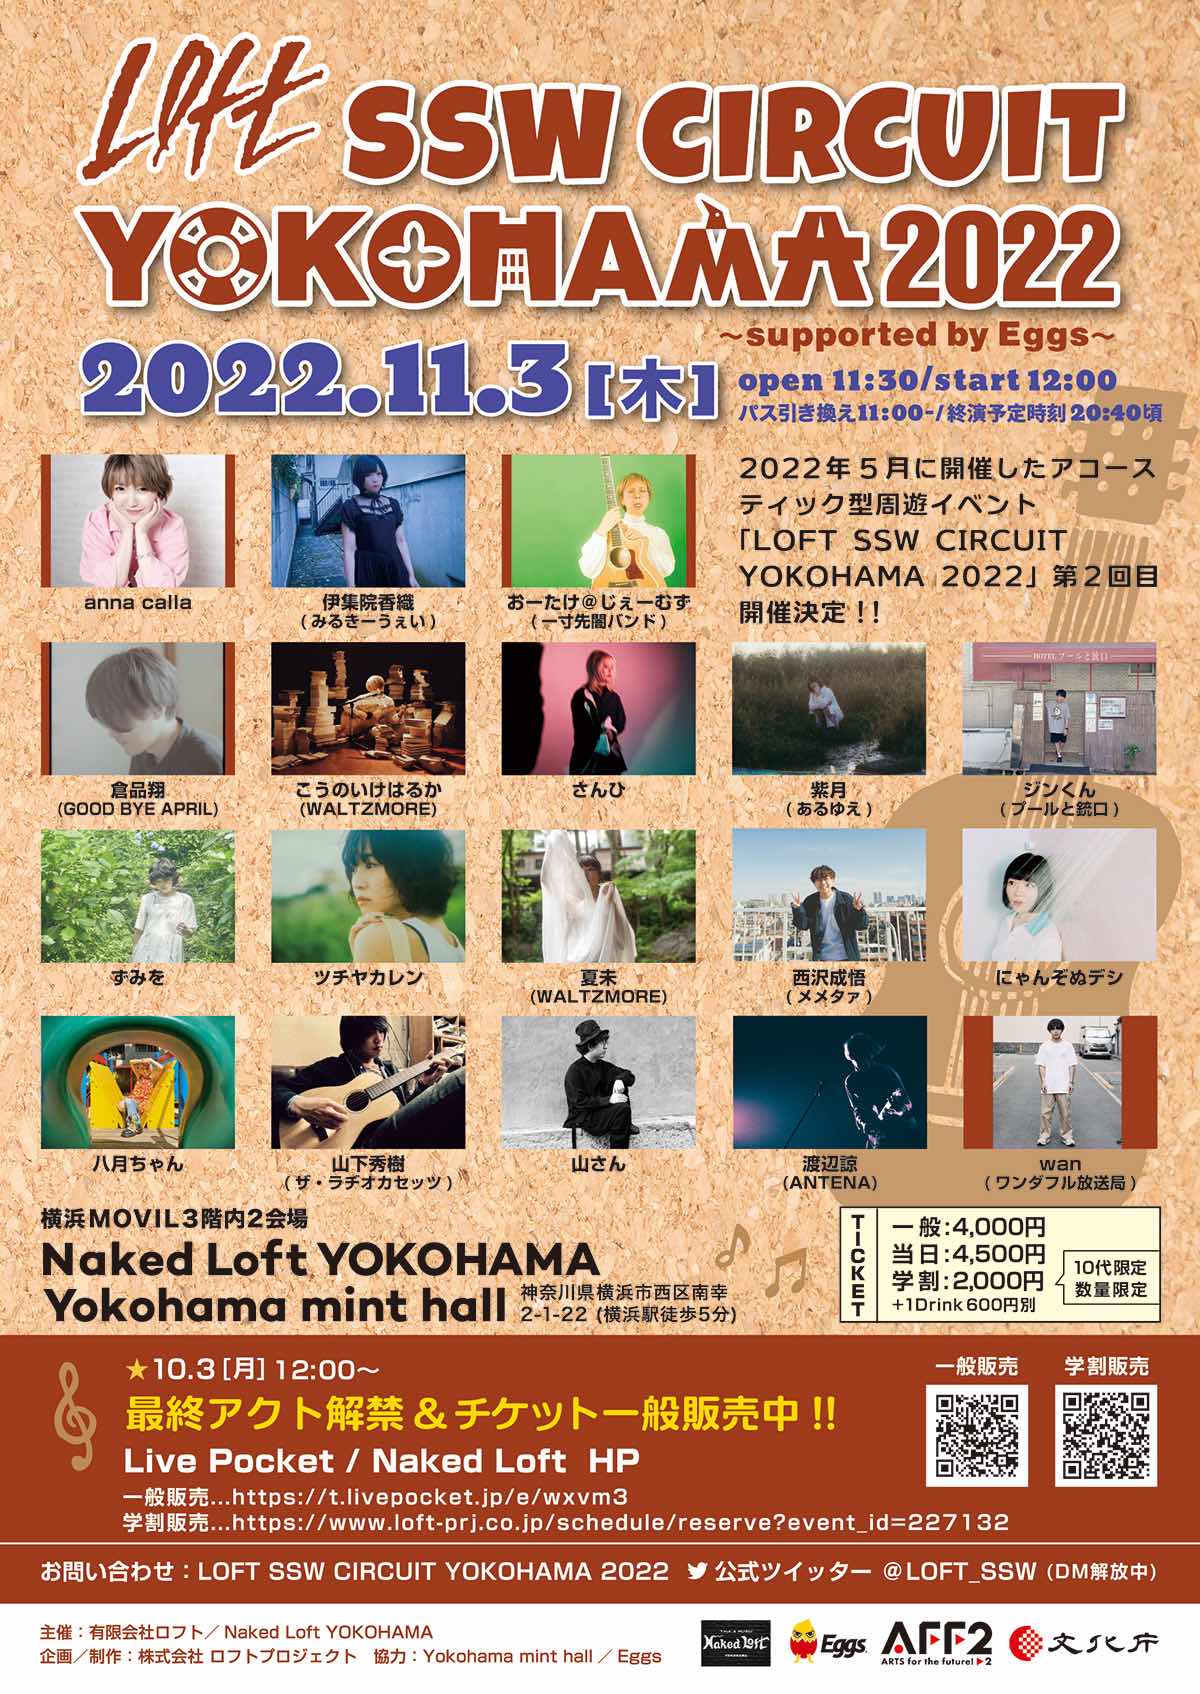 LOFT SSW CIRCUIT YOKOHAMA 2022 〜supported by Eggs〜